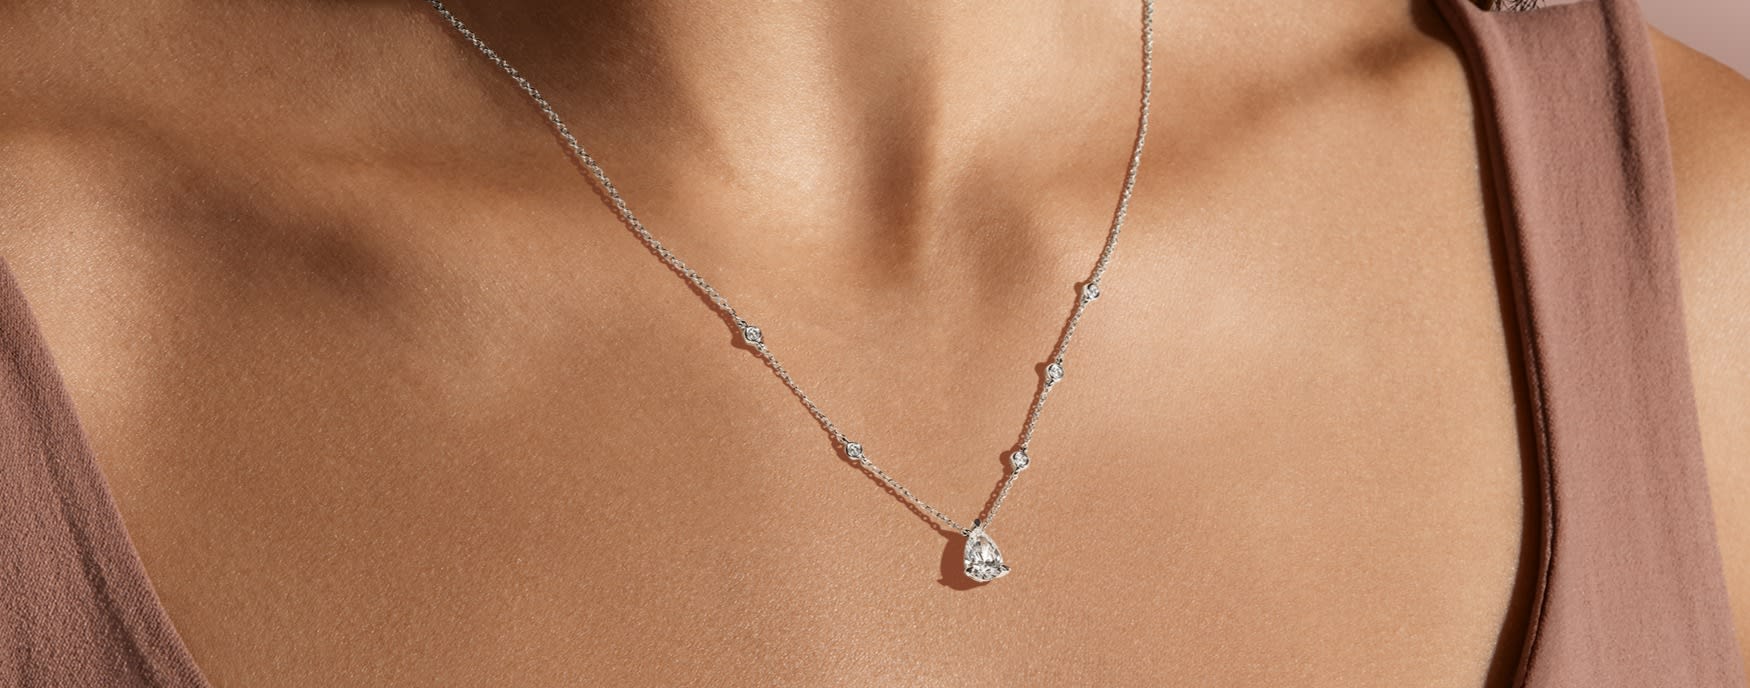 7 Must Buy Diamond Tennis Necklaces